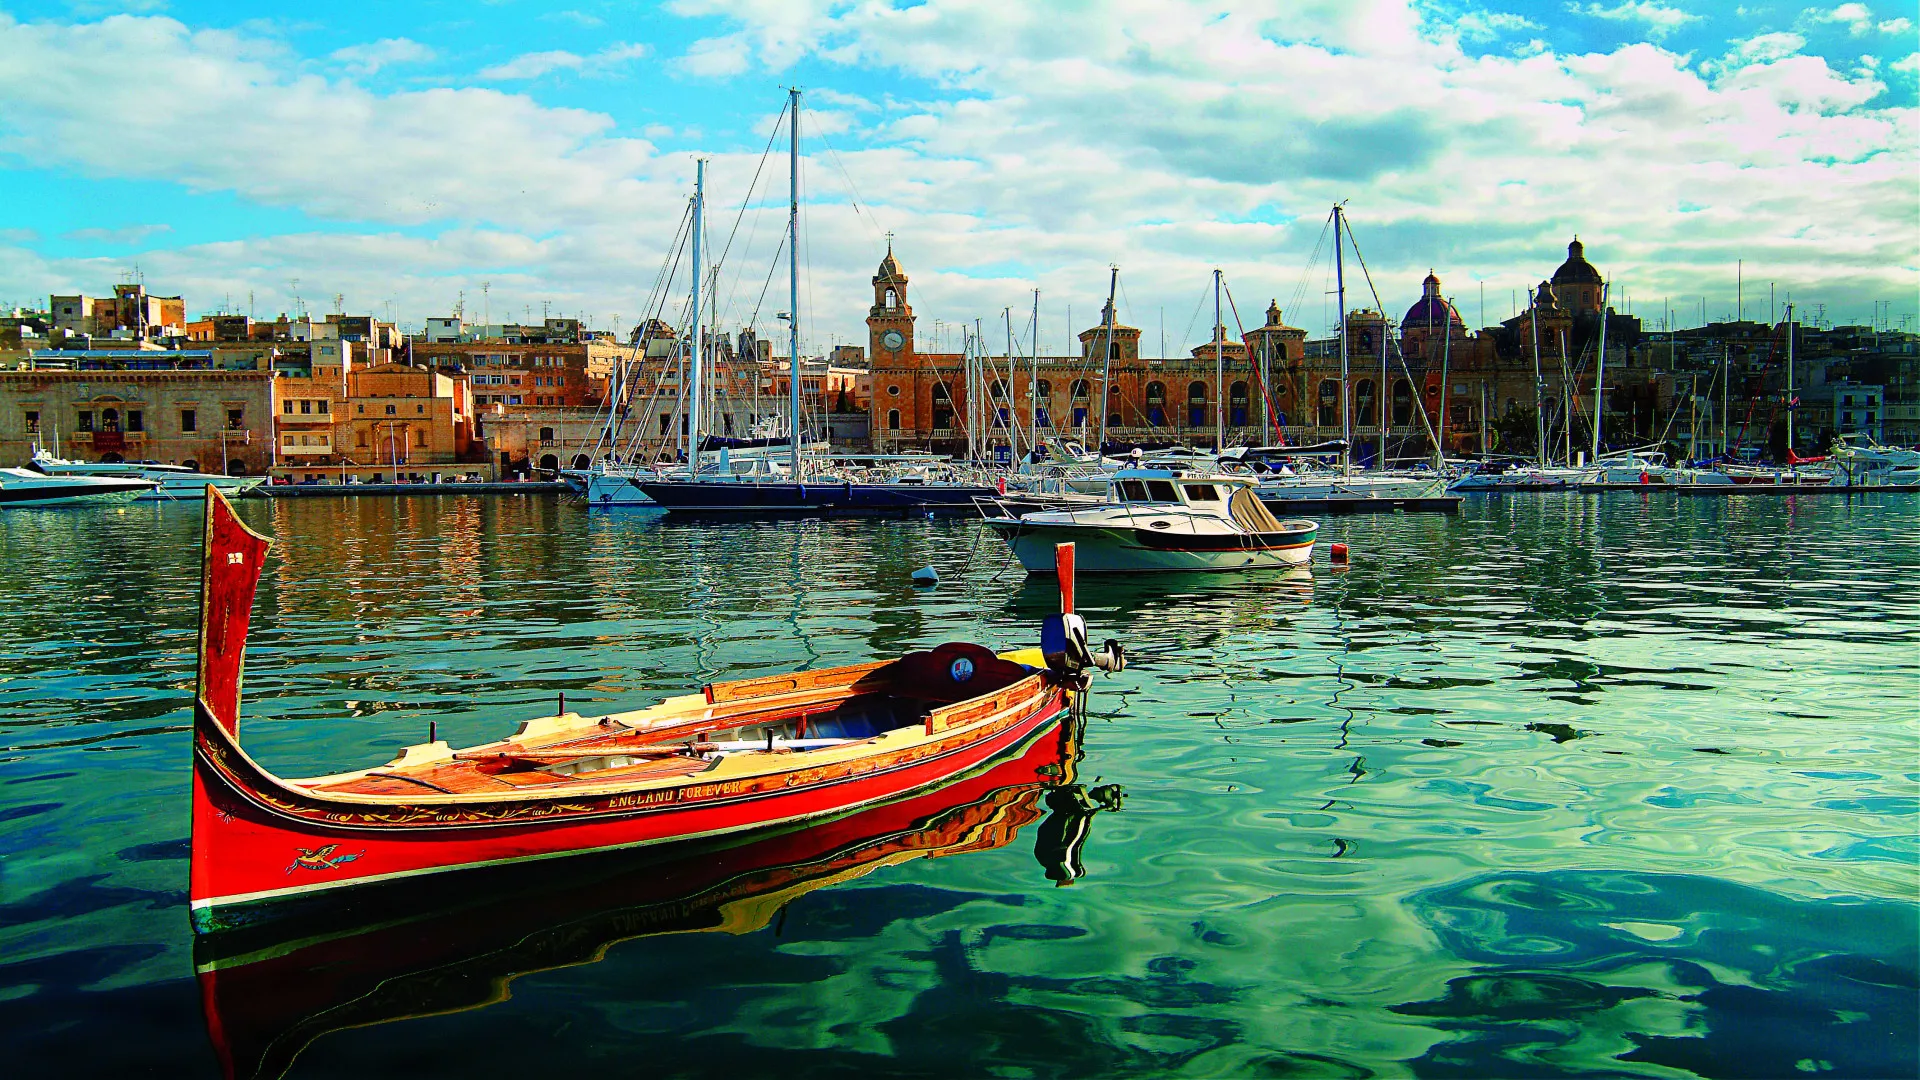 Dghajsa (rode gondel) in Vittoriosa Marina, Three Cities, Malta